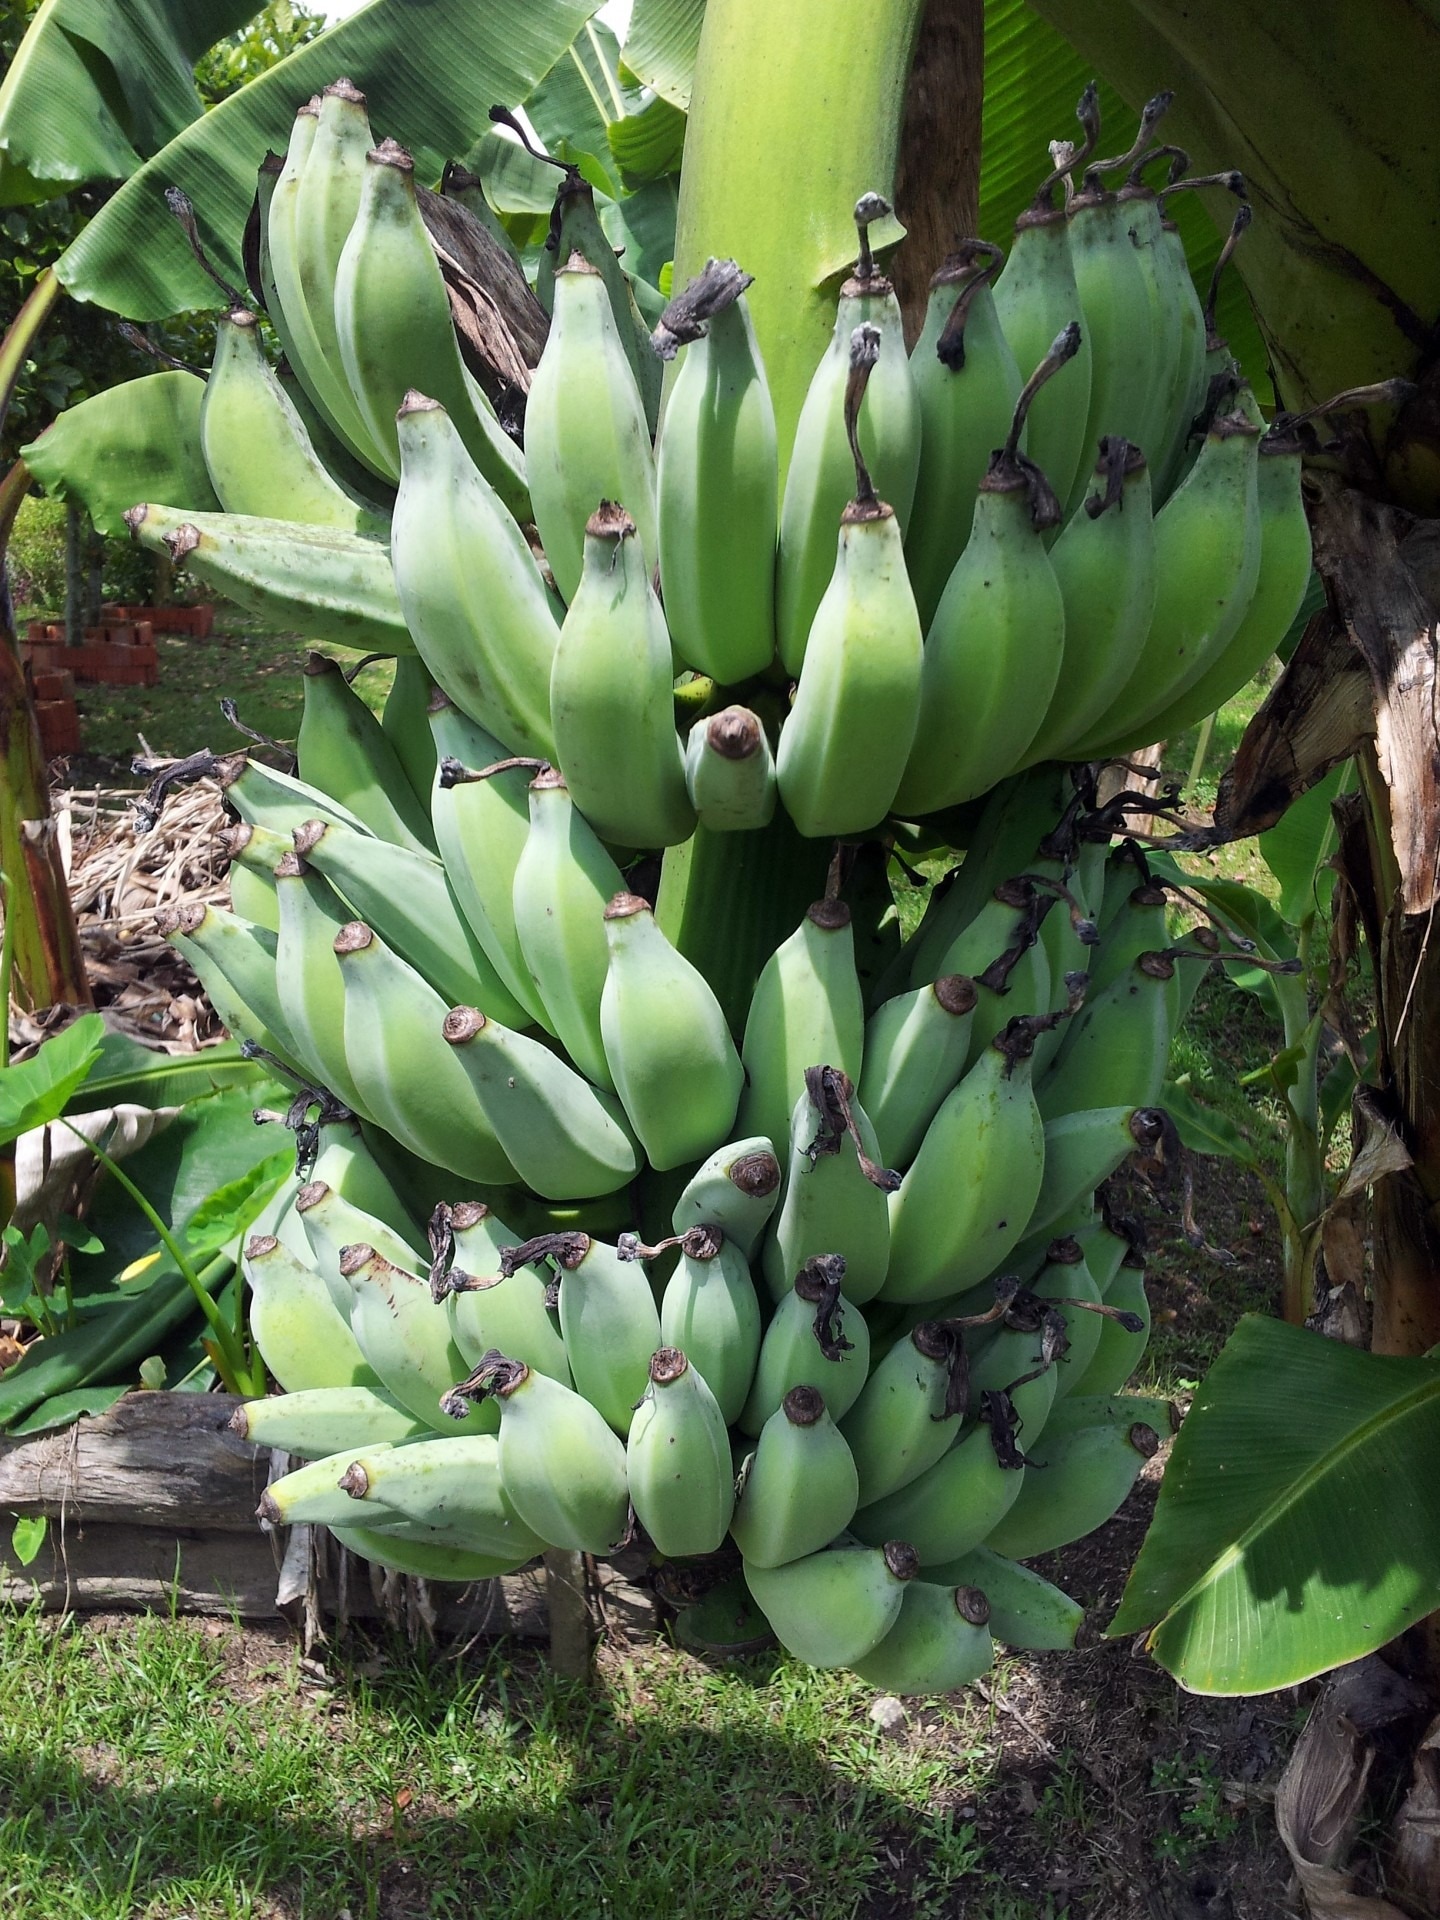 unripe bananas